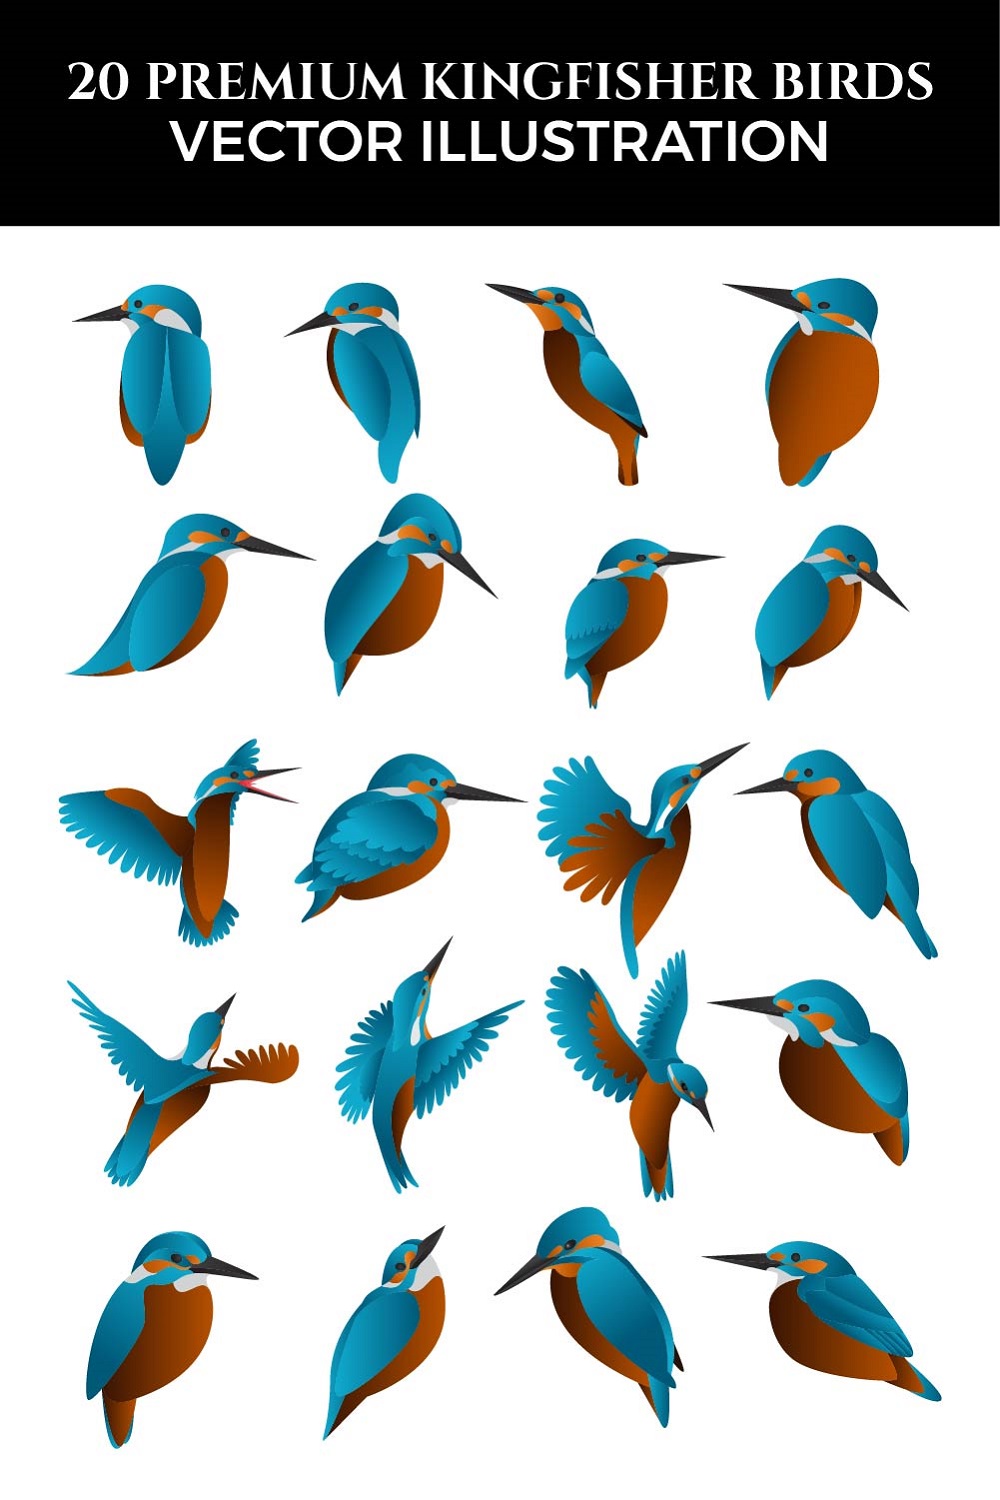 Premium Kingfisher Birds Vector illustration pinterest image.